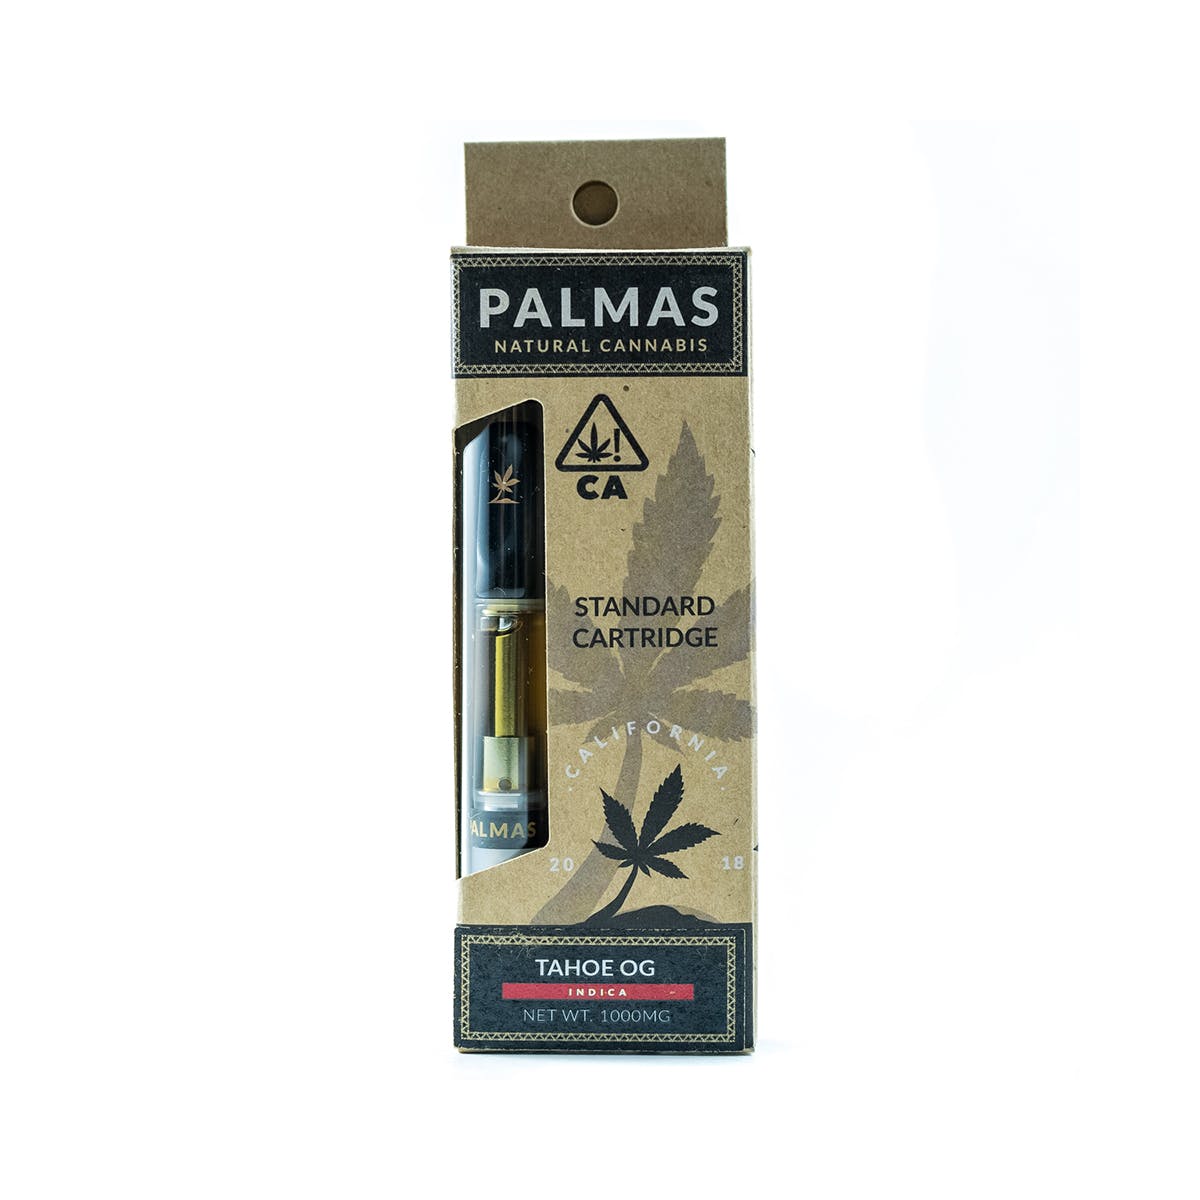 marijuana-dispensaries-straight-up-20-in-compton-palmas-standard-cartridge-tahoe-og